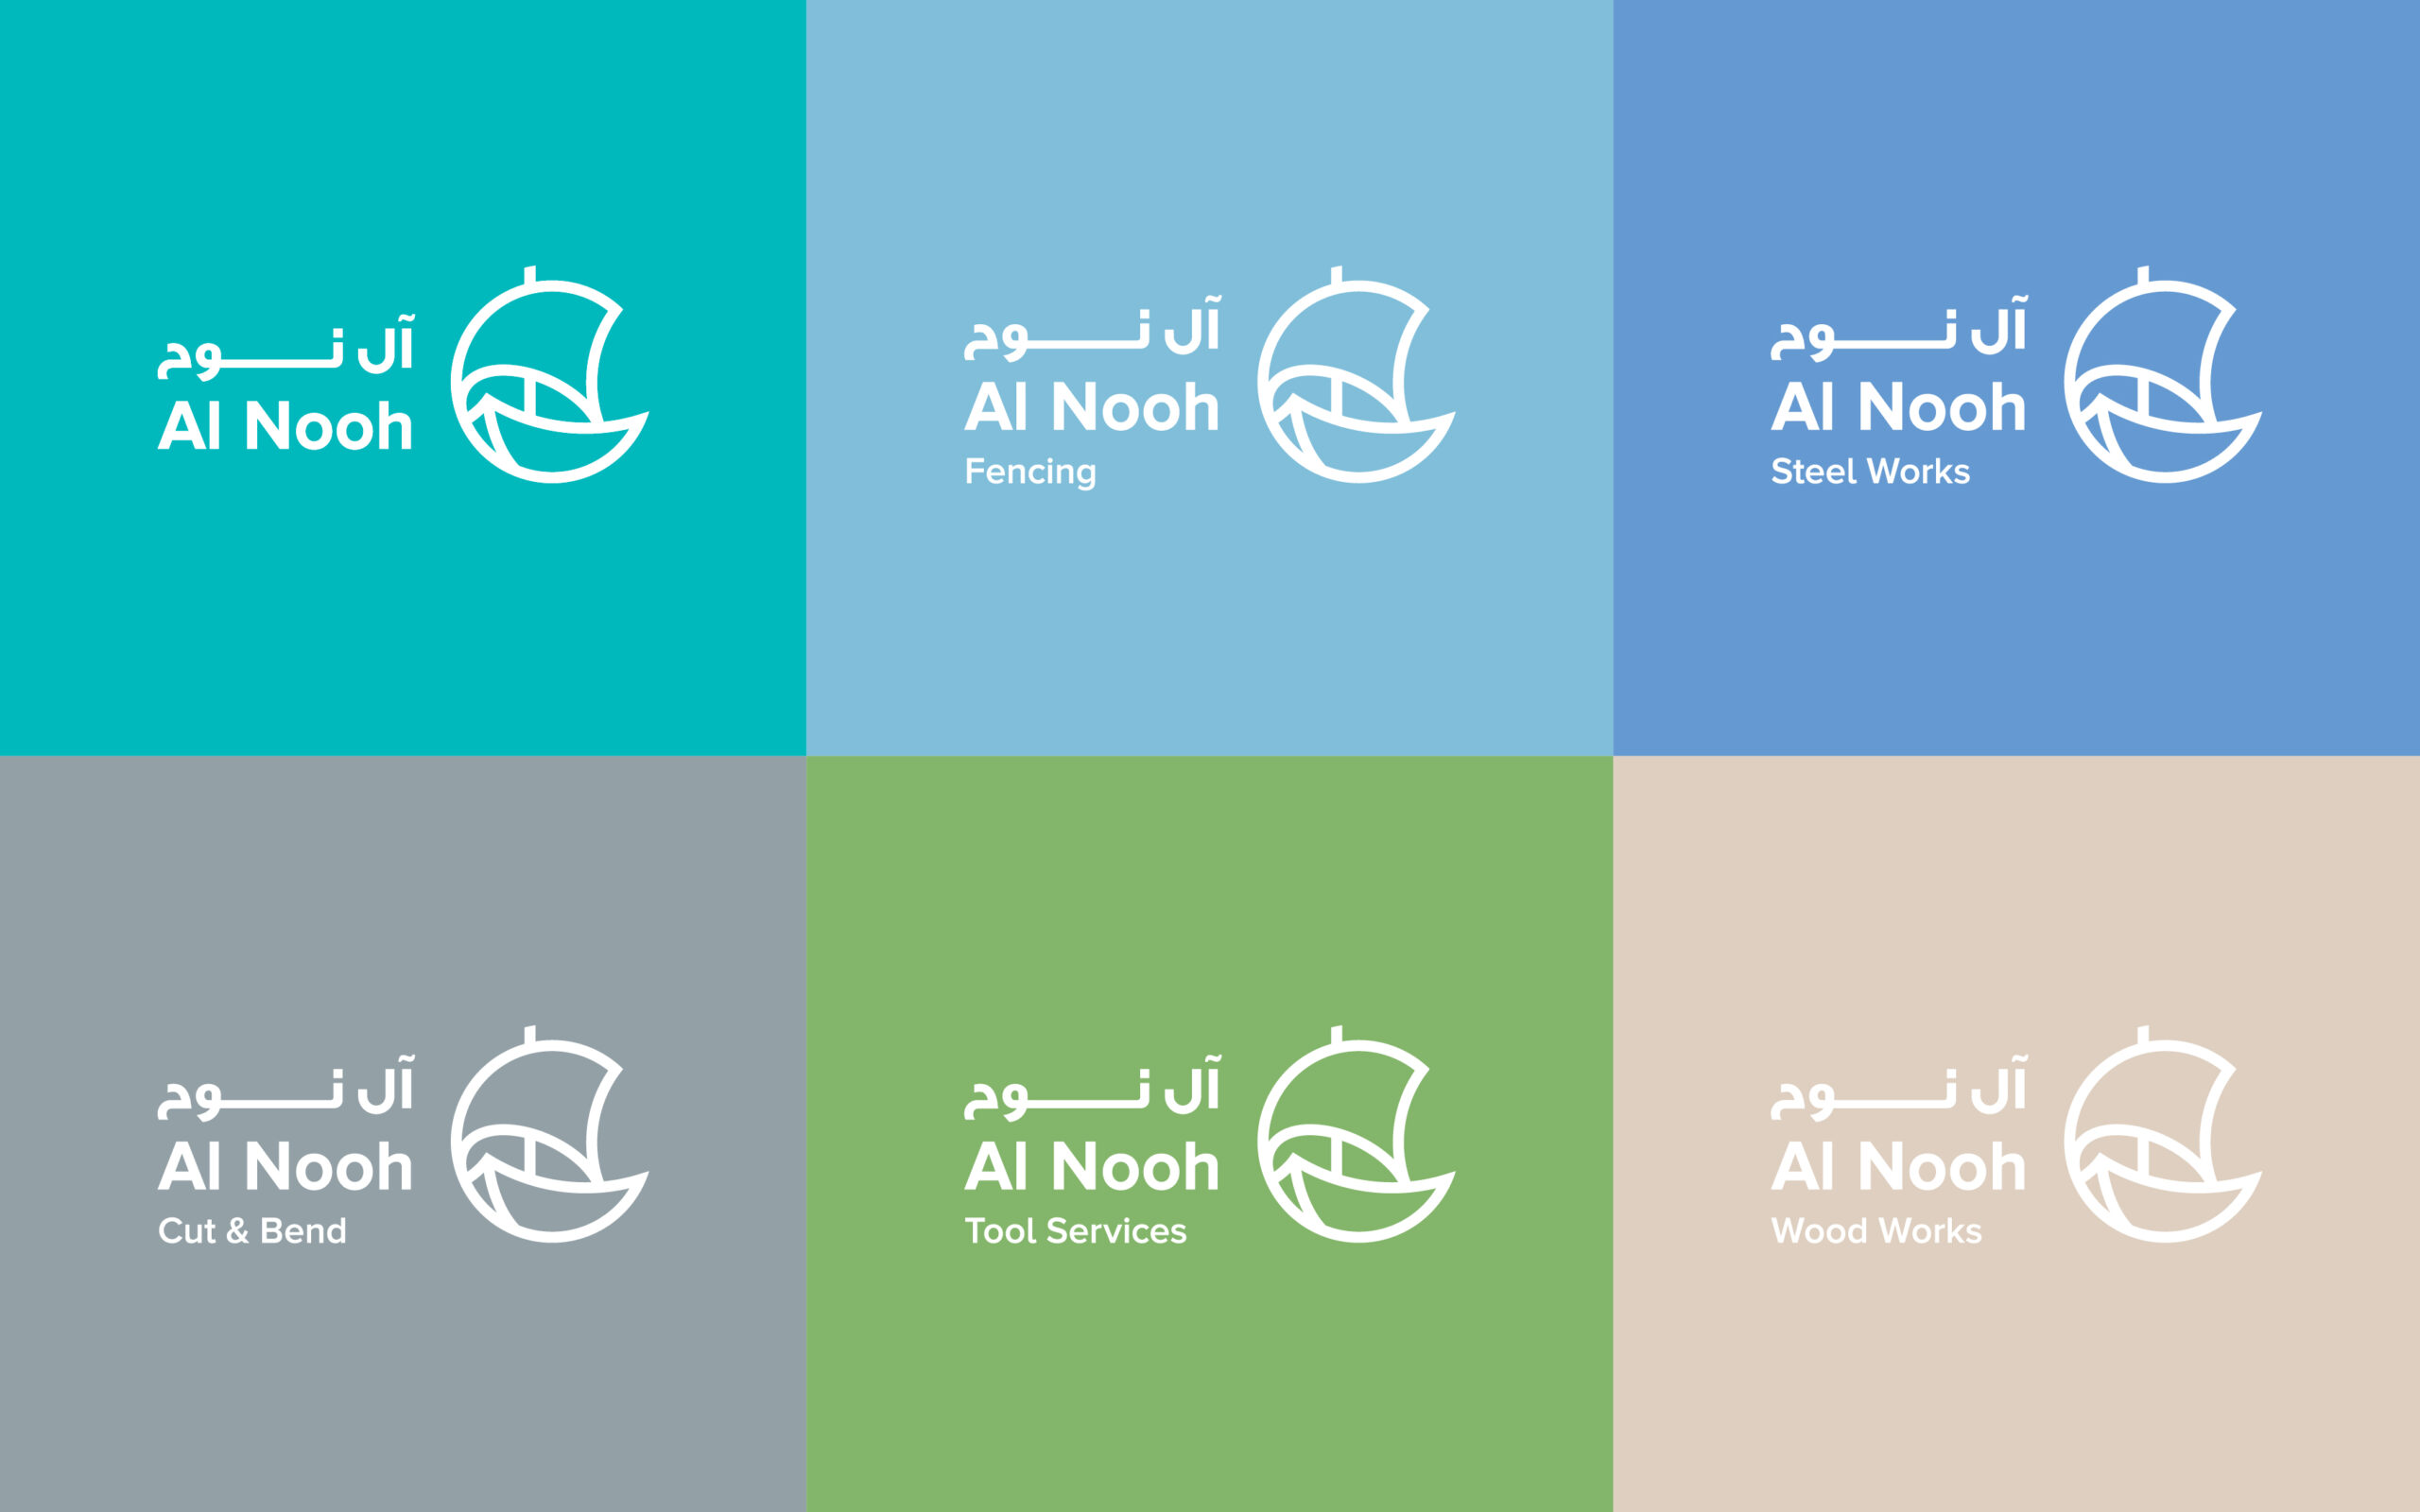 Al Nooh. Master brand and sub brand logos